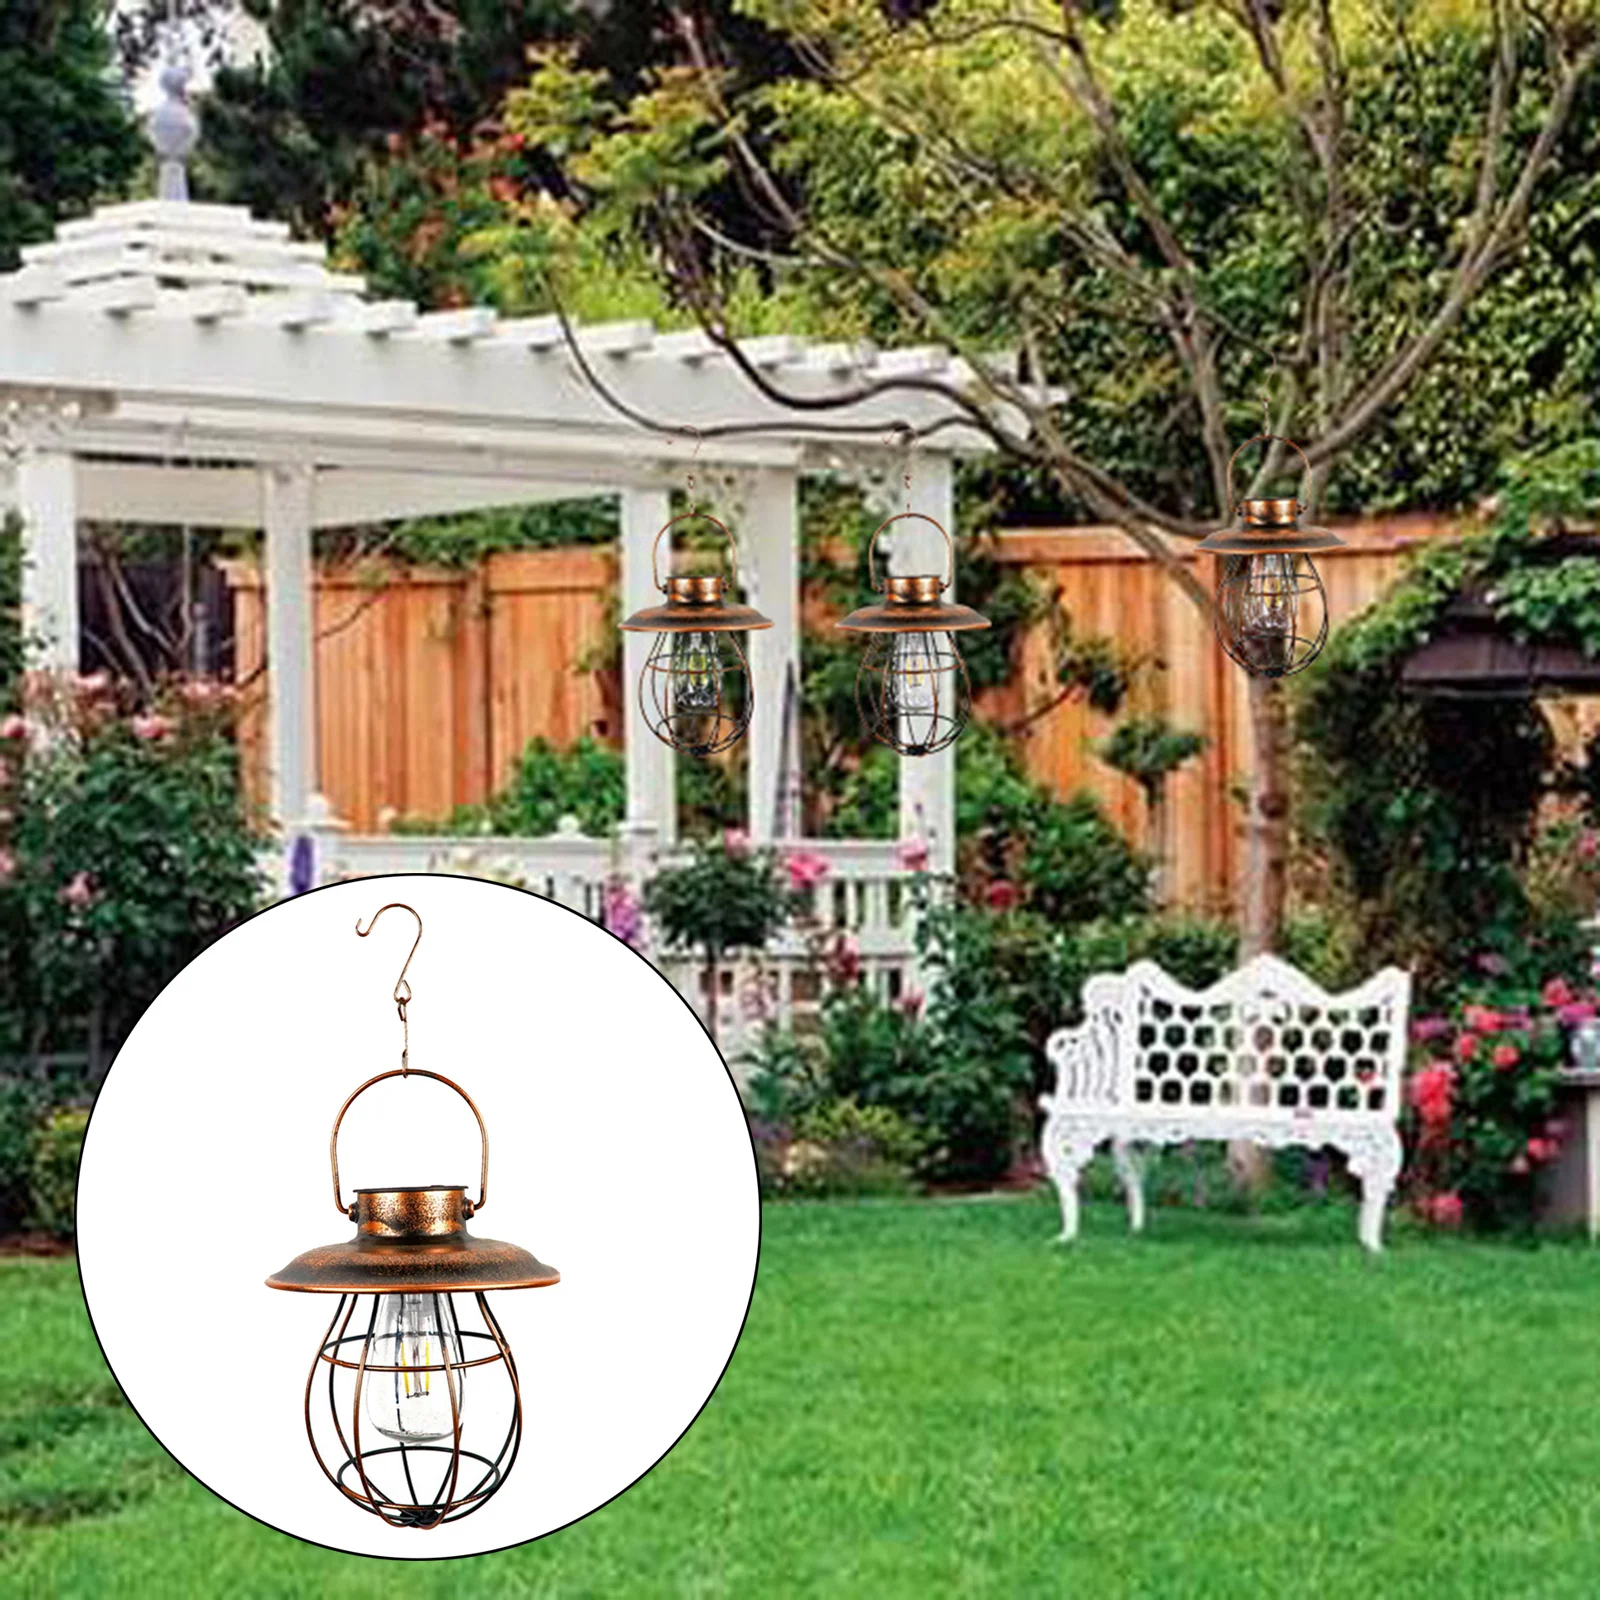 Solar Lantern Lamp Outdoor Hanging Waterproof Portable Garden Decorative Camp Light for Patio Garden Party Landscape Pavilion